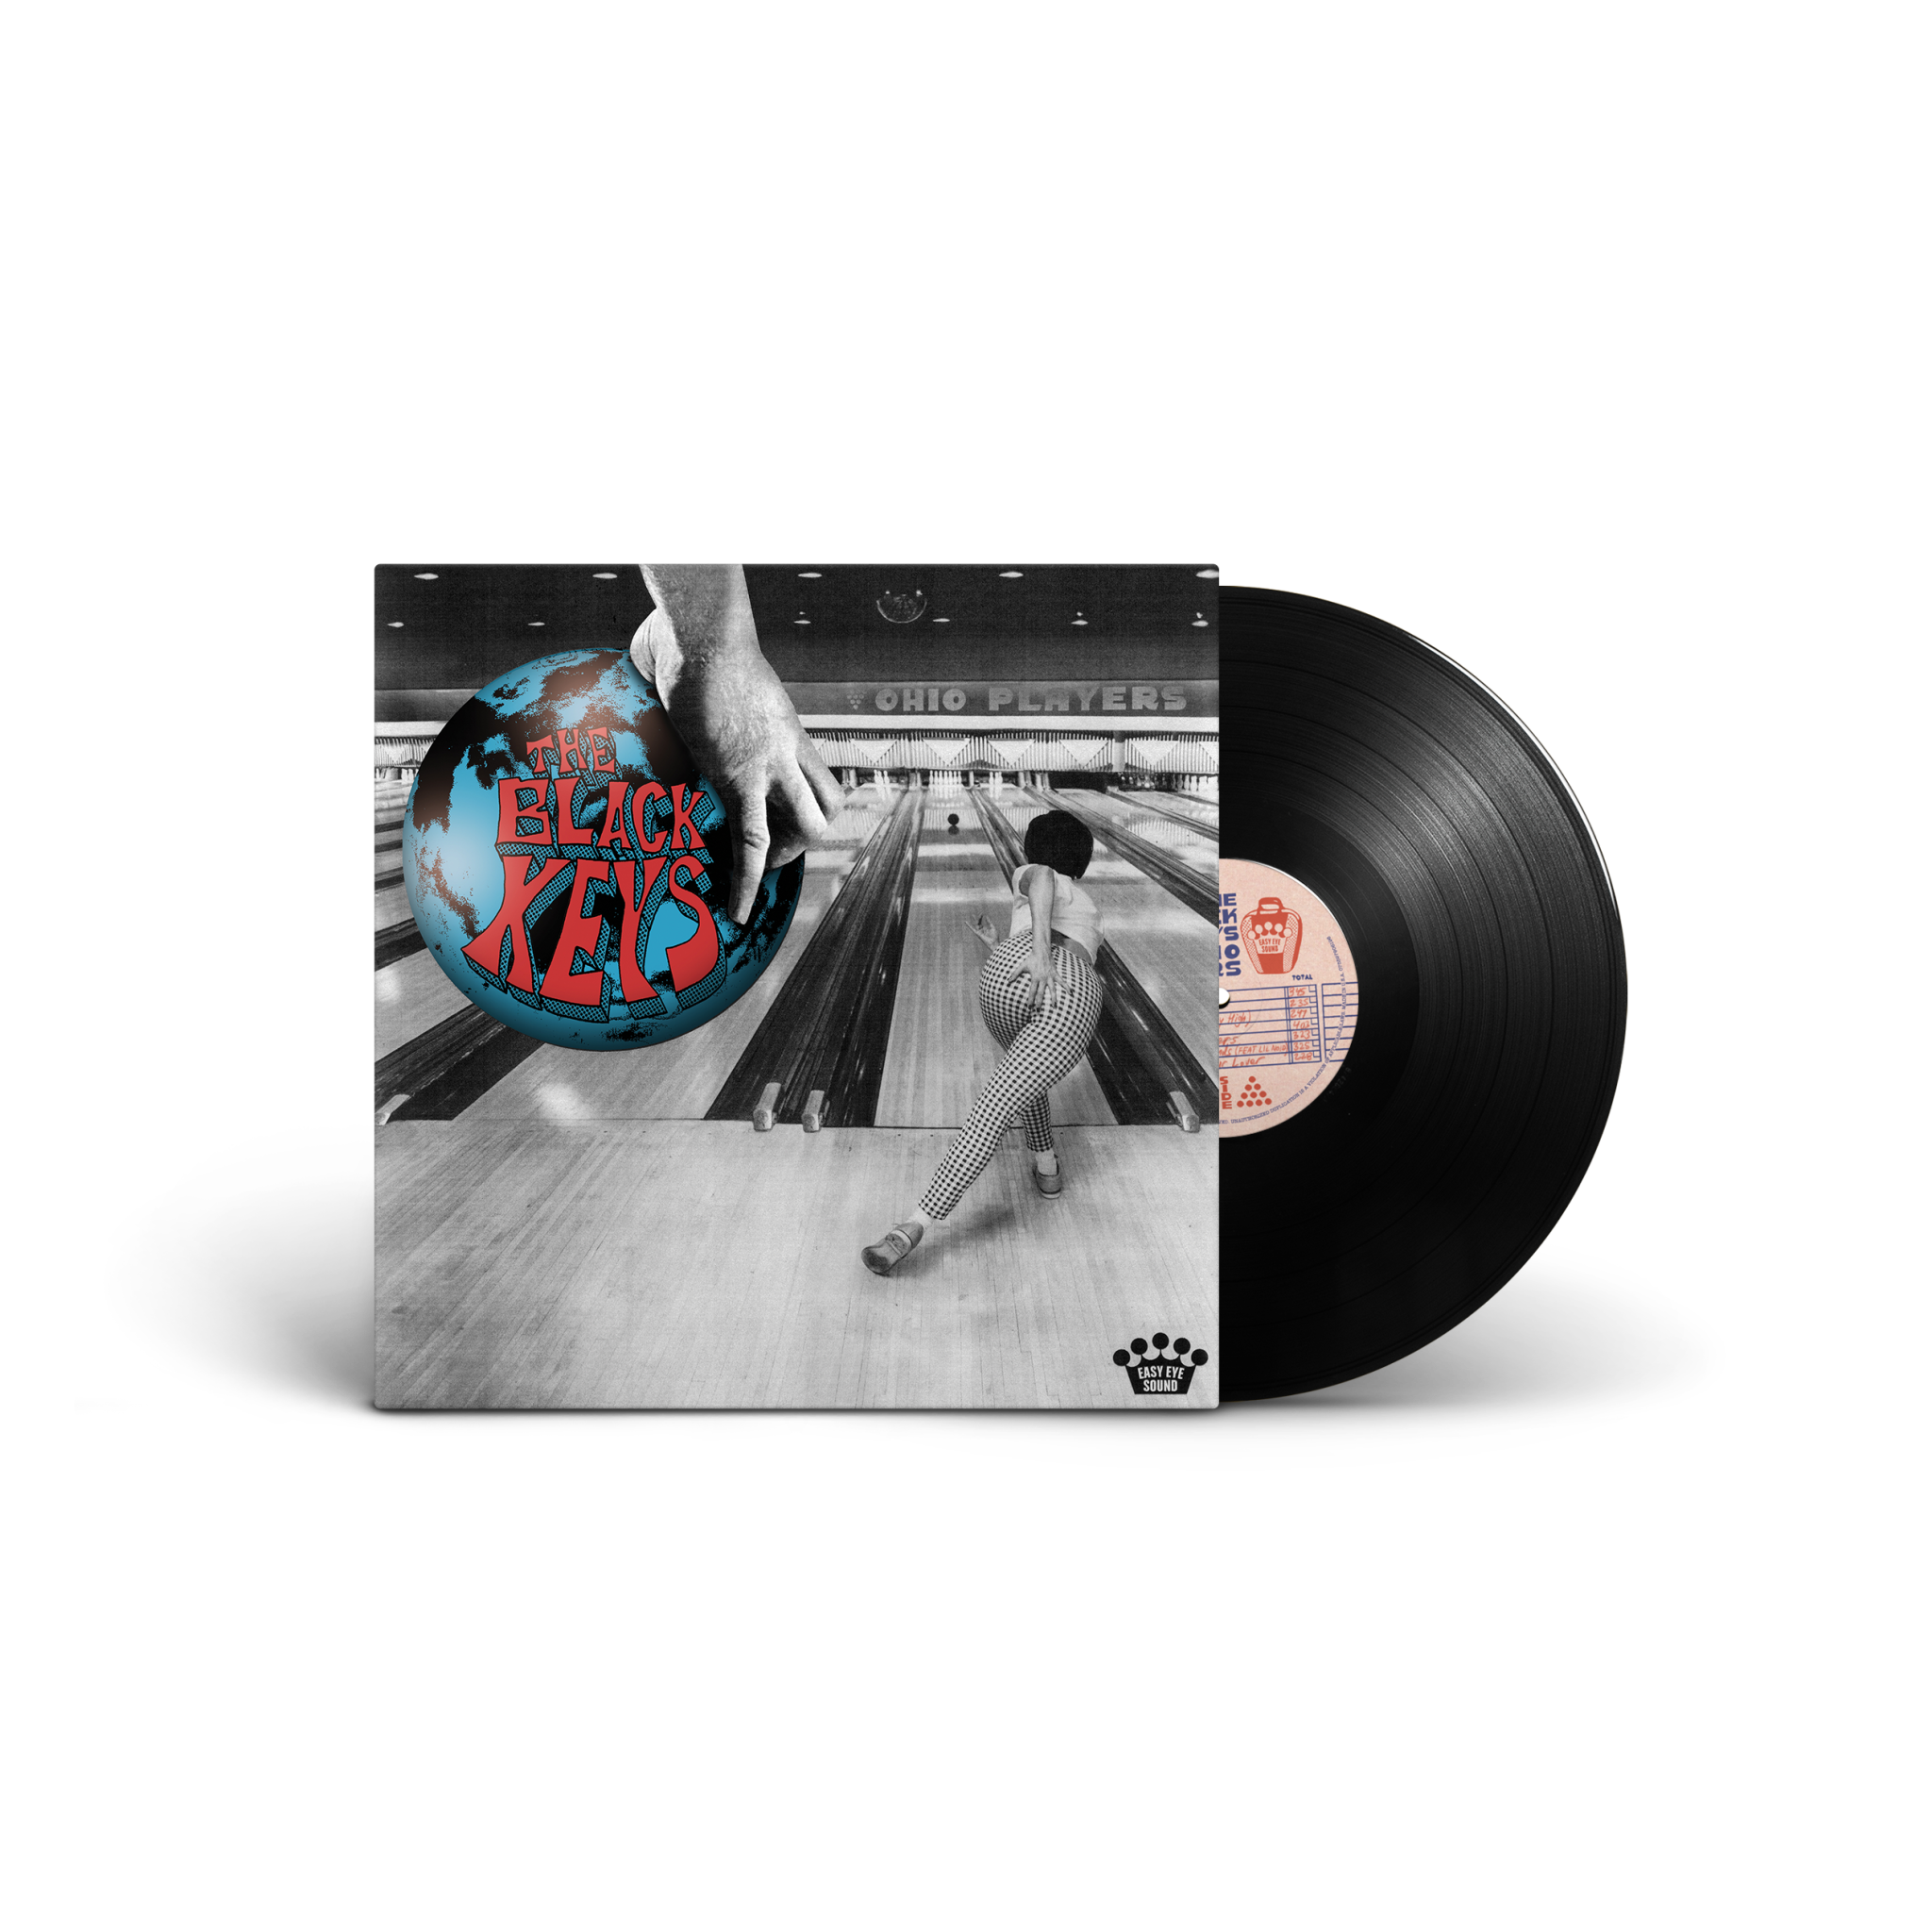 Black Keys- Ohio Players (Black Vinyl) (PREORDER)